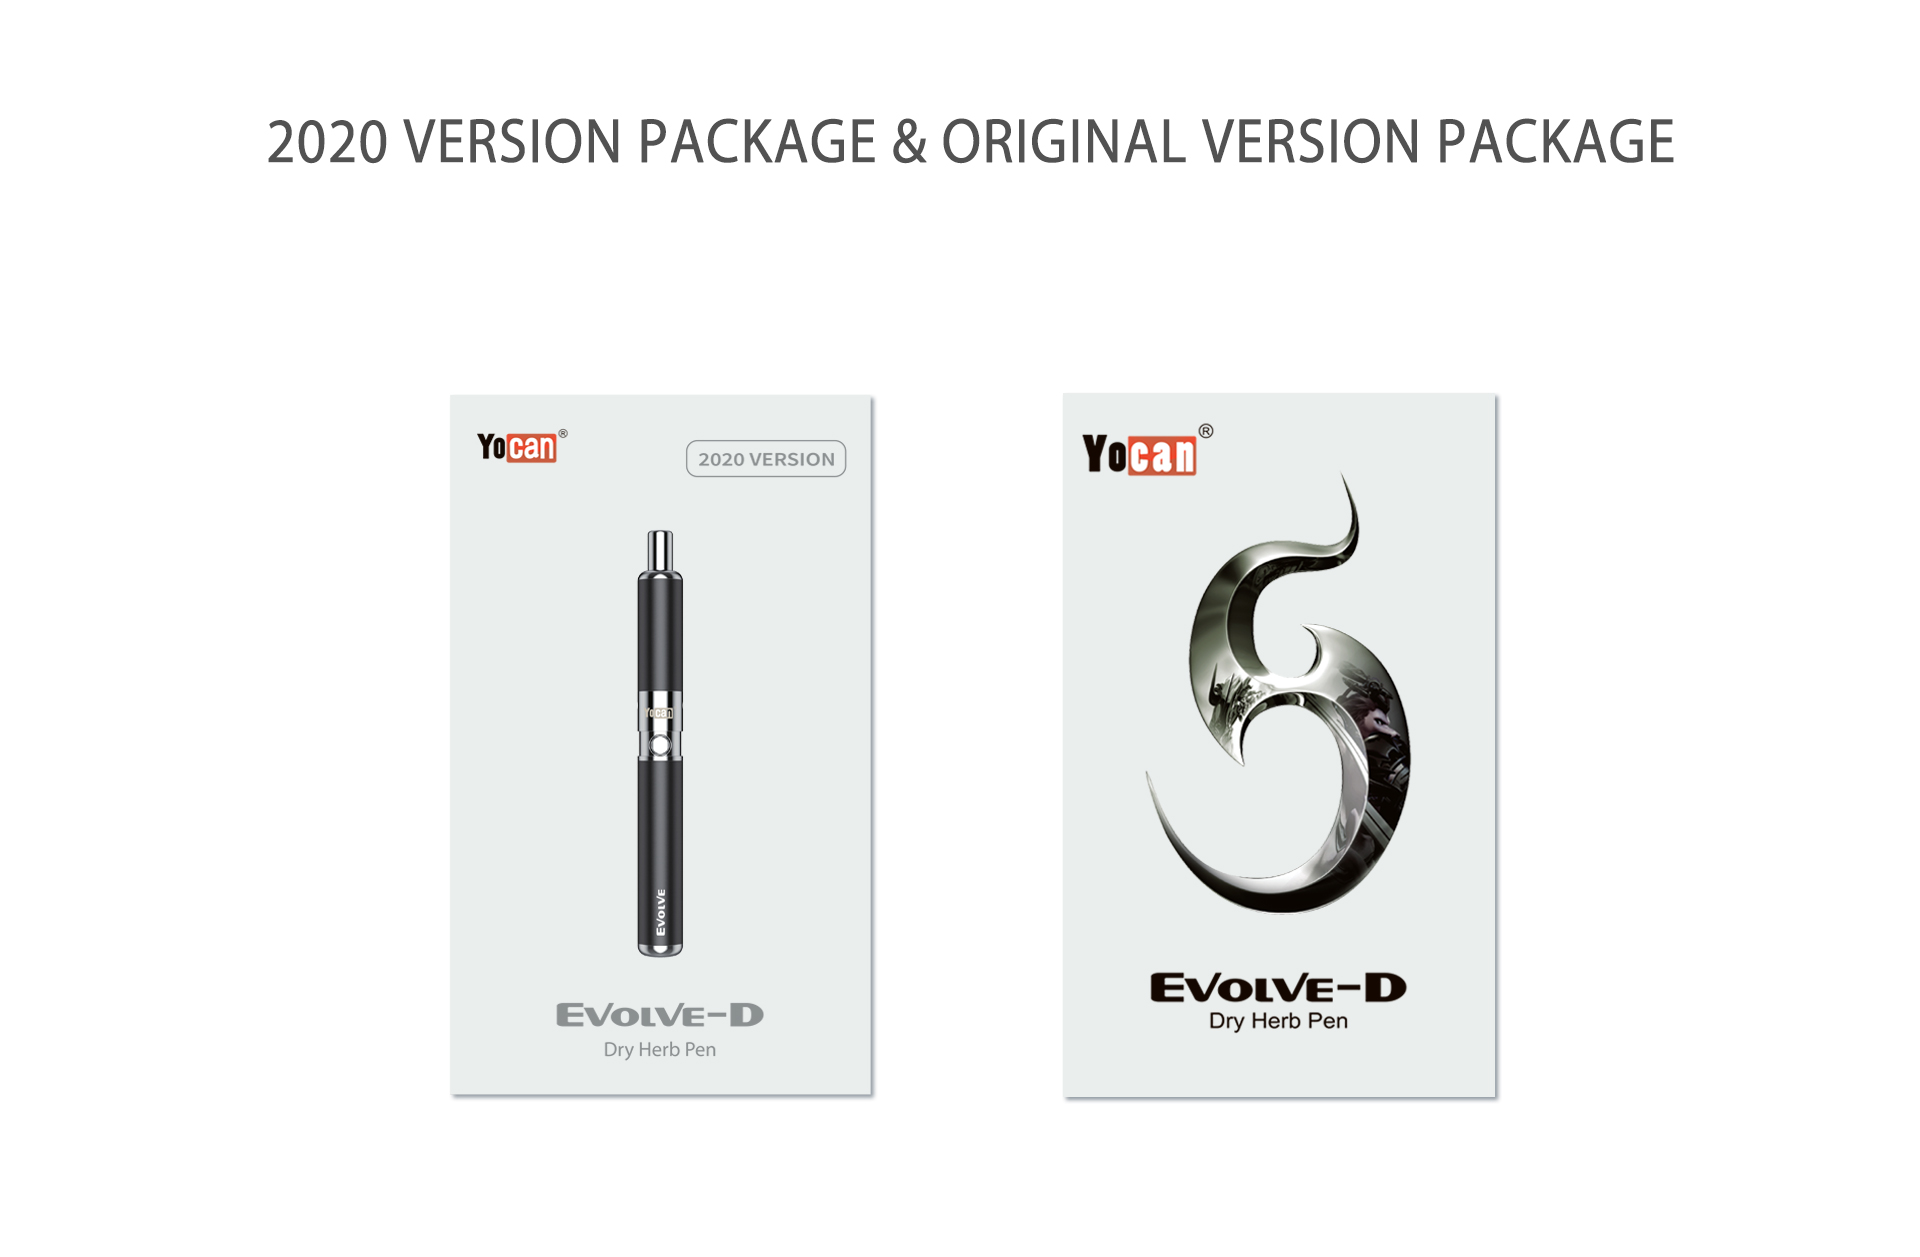 Yocan Evolve-D vaporizer pen 2020 version package box.